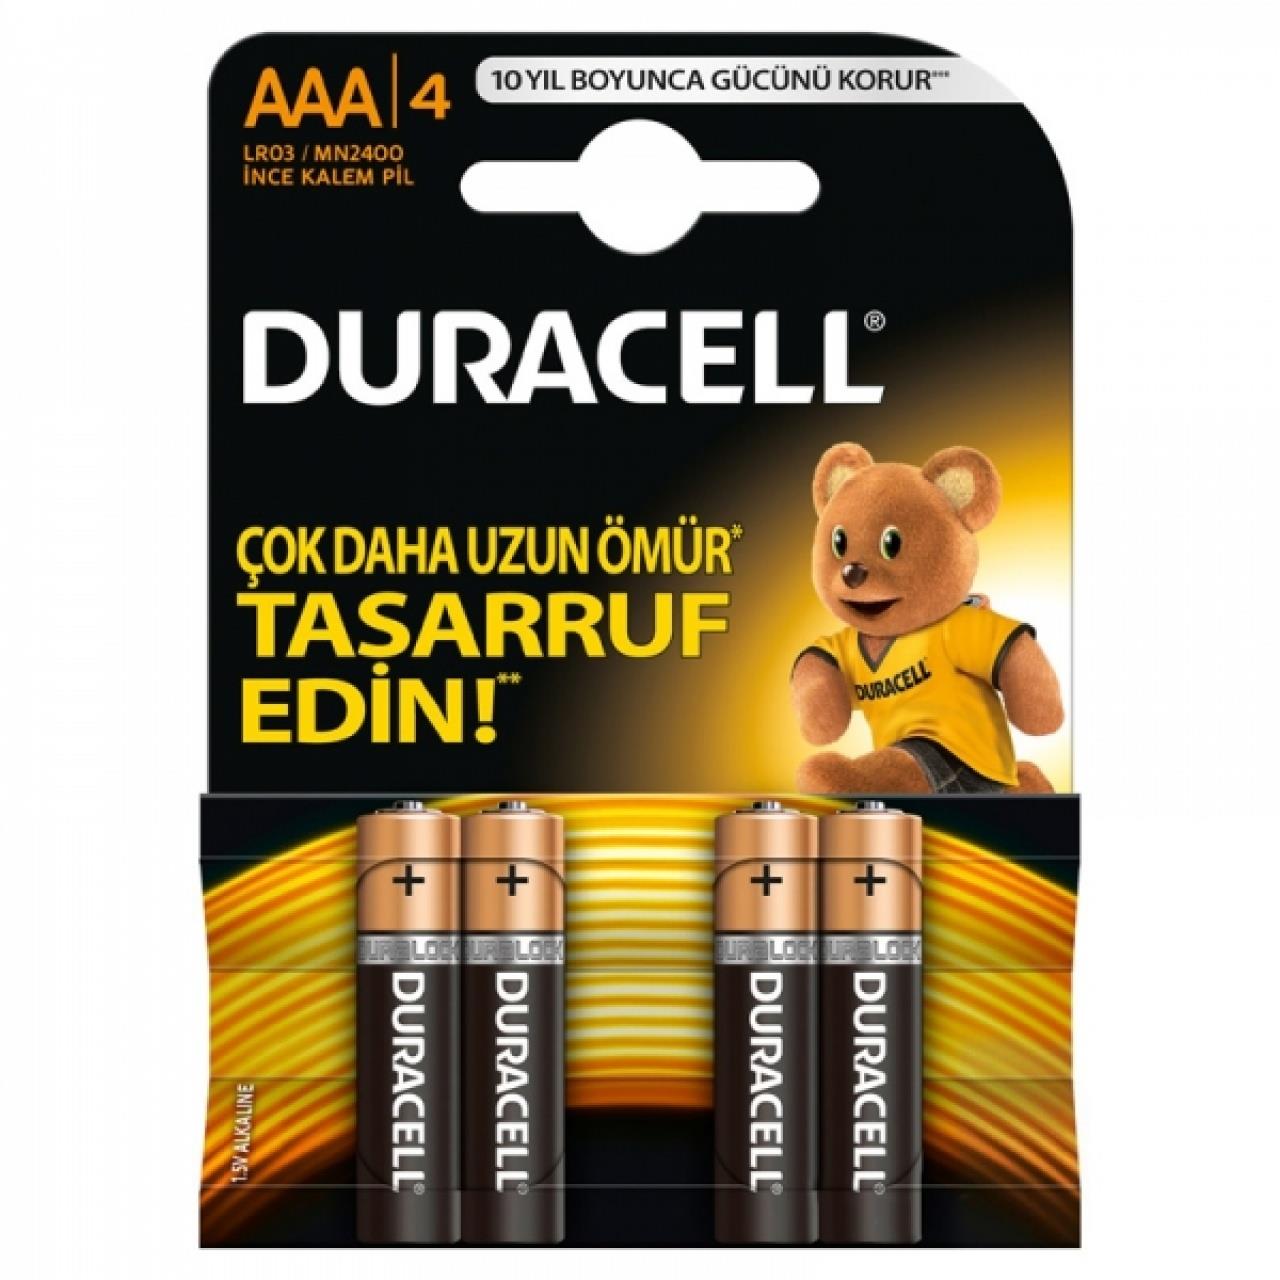 Duracell Alkalin AAA İnce Kalem Pil 4'lü Paket 5000394148802